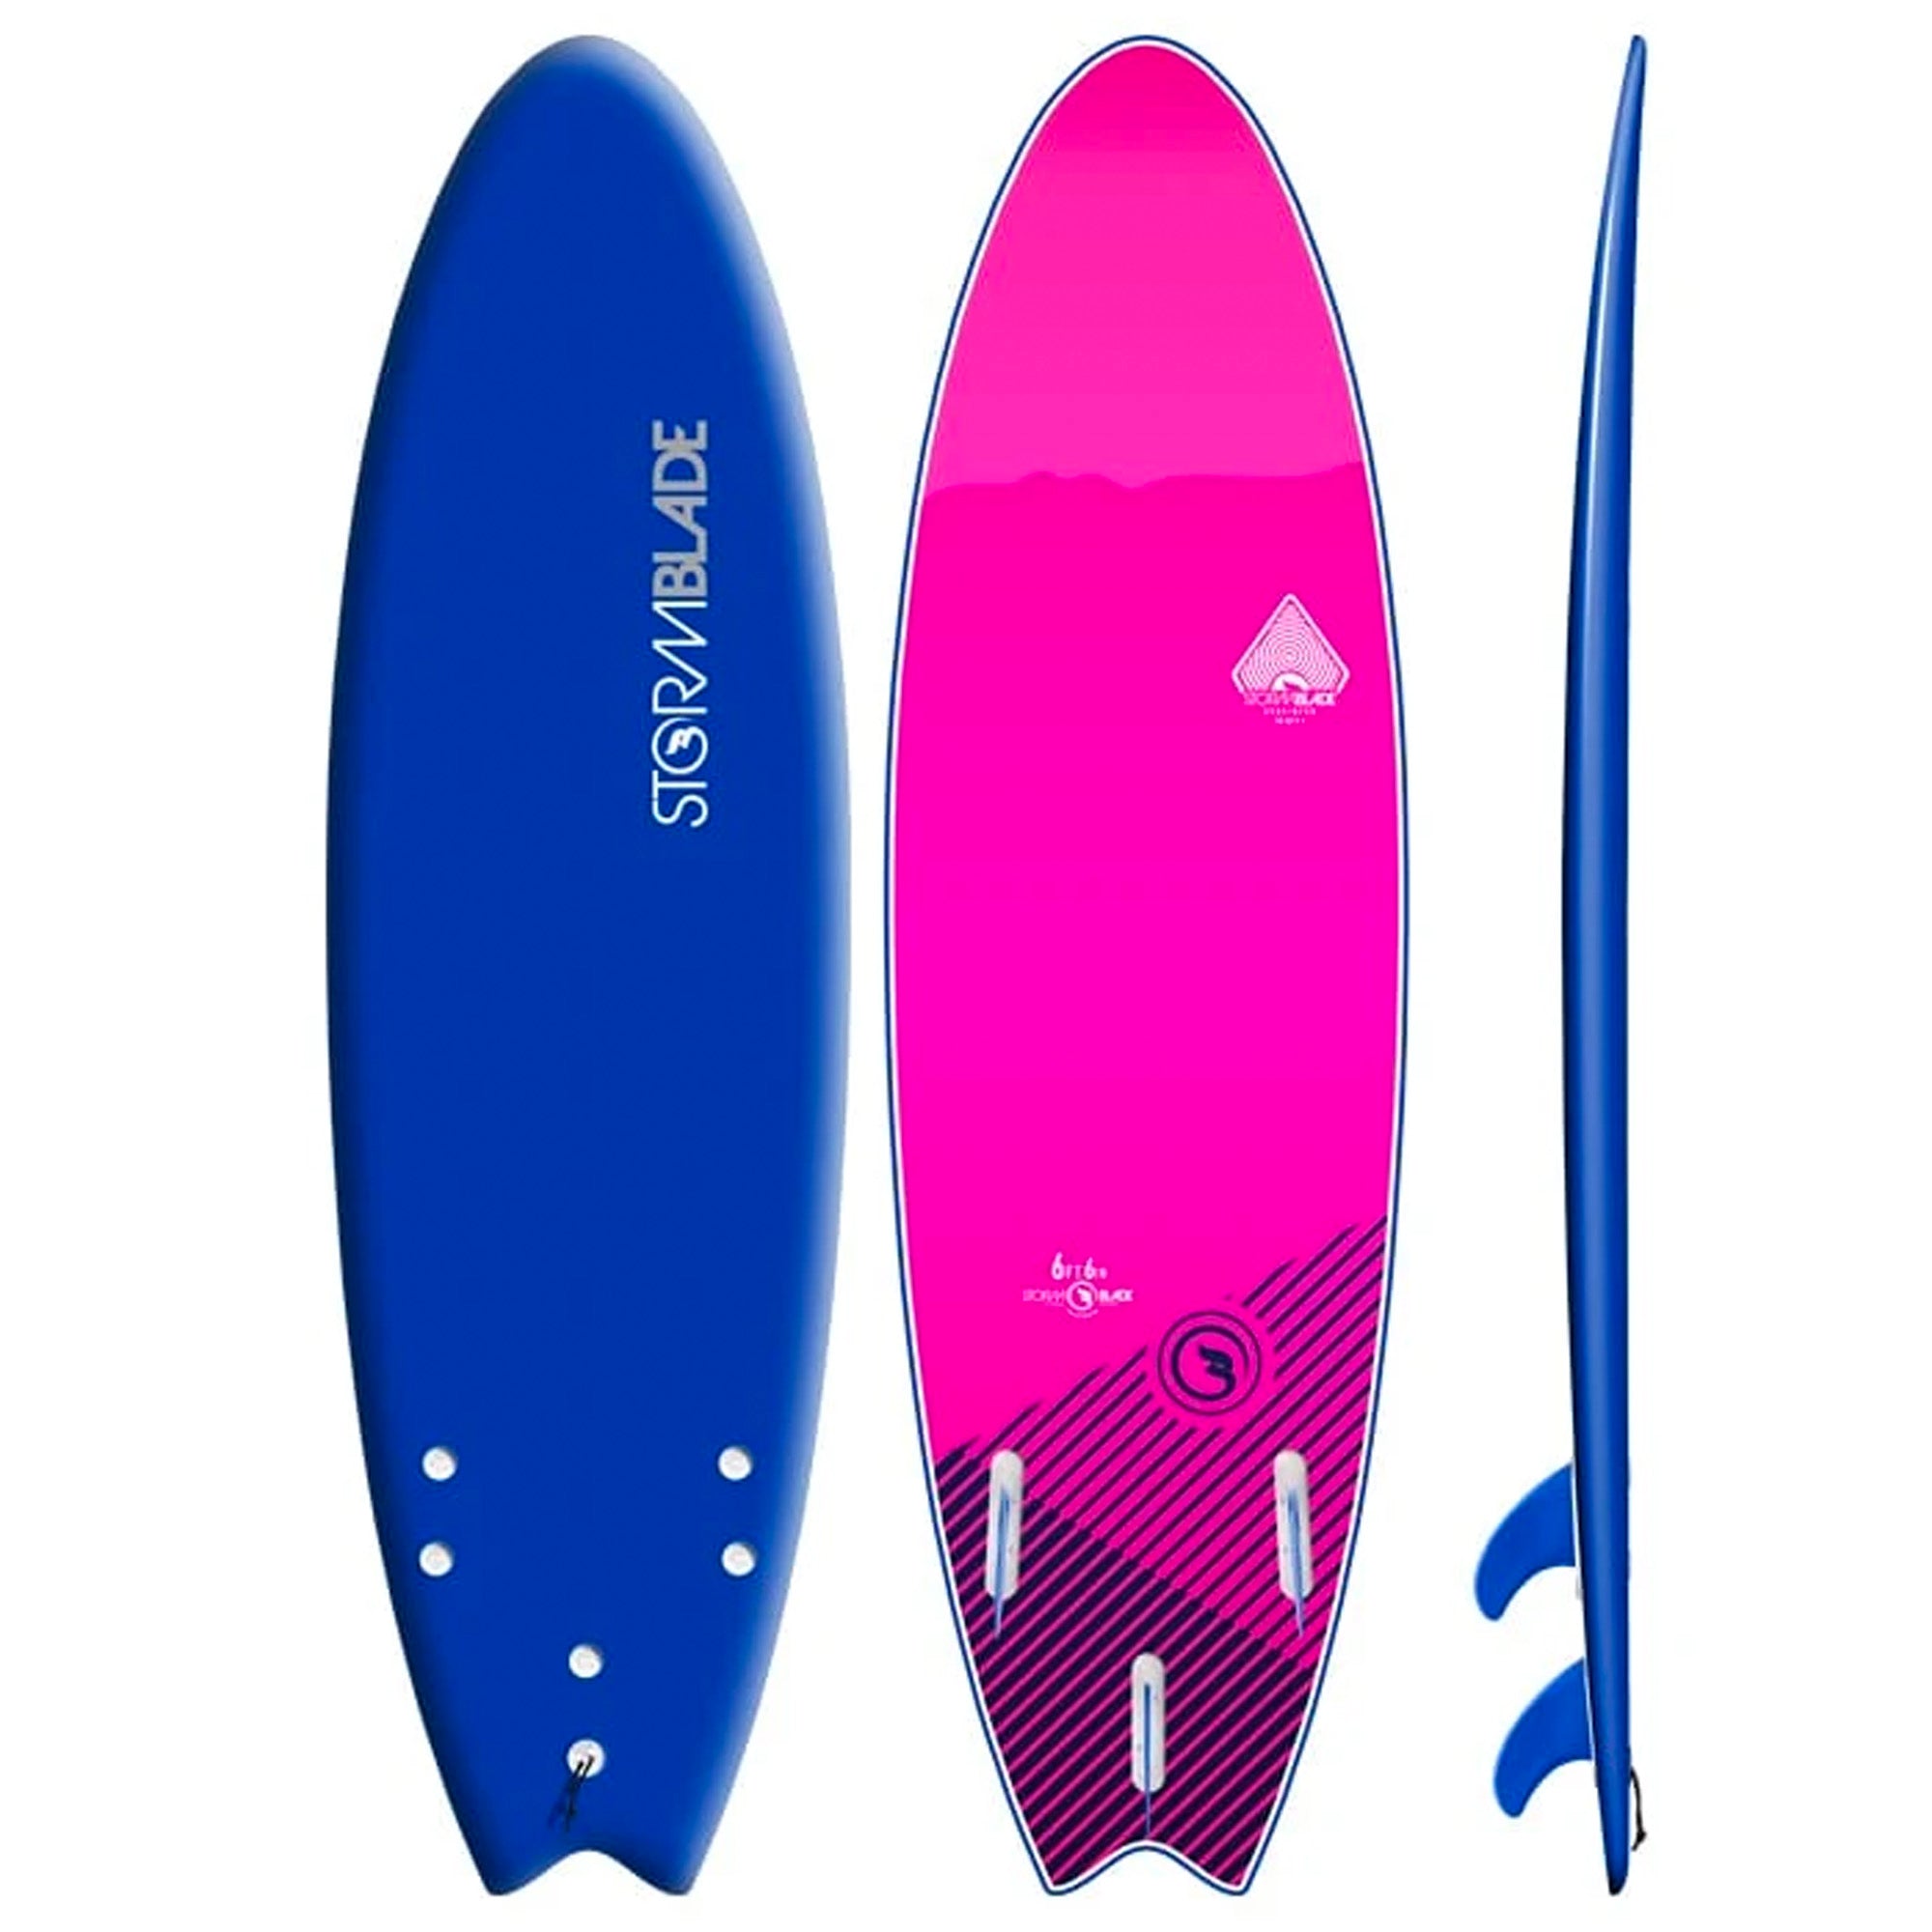 Storm Blade Swallow 6'0 Soft Surfboard